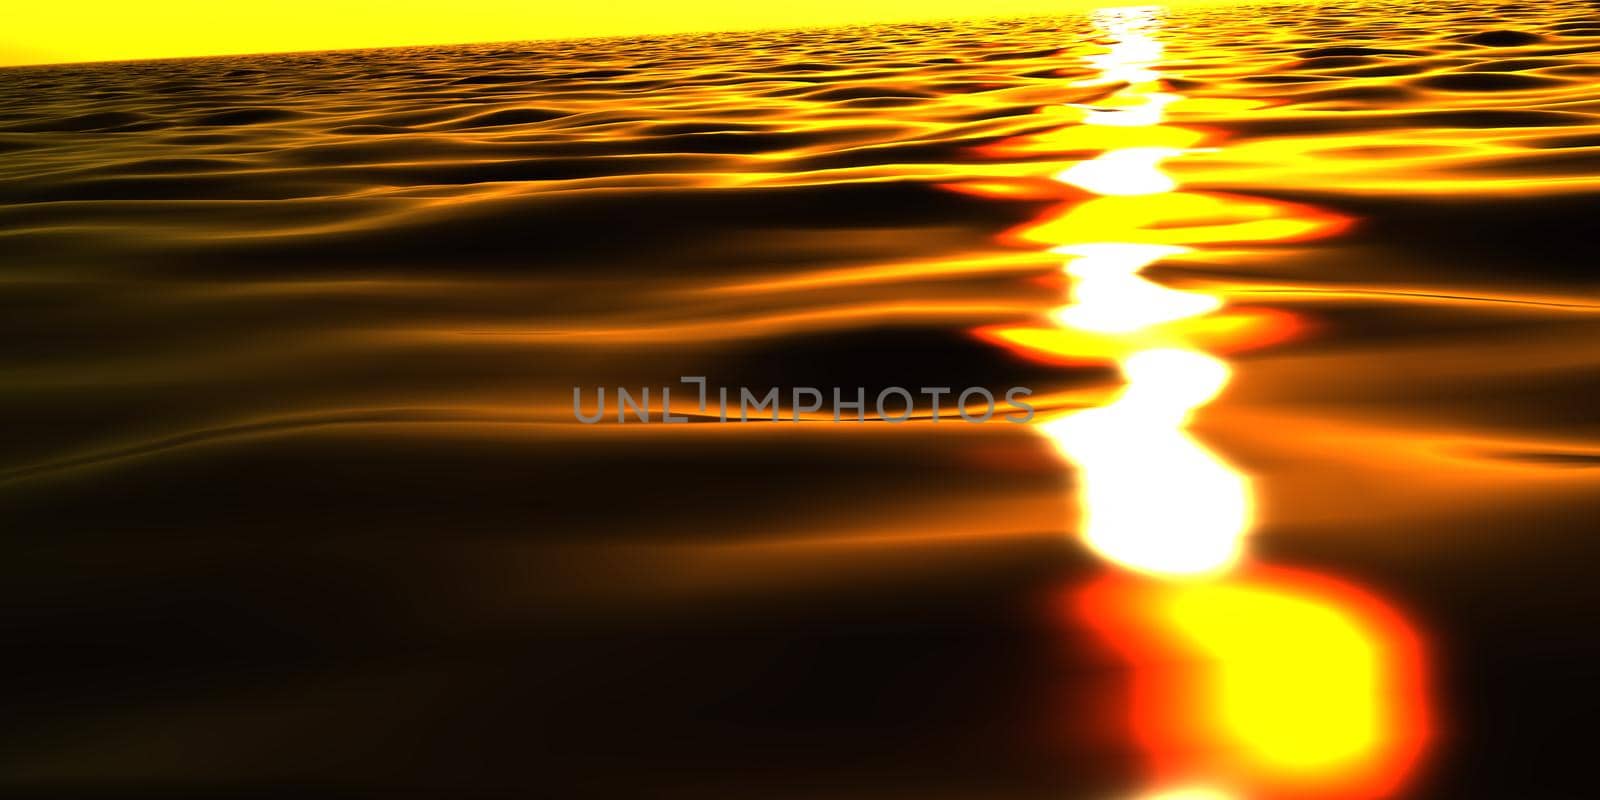 ocean sunset macro, sun light in water by alex_nako